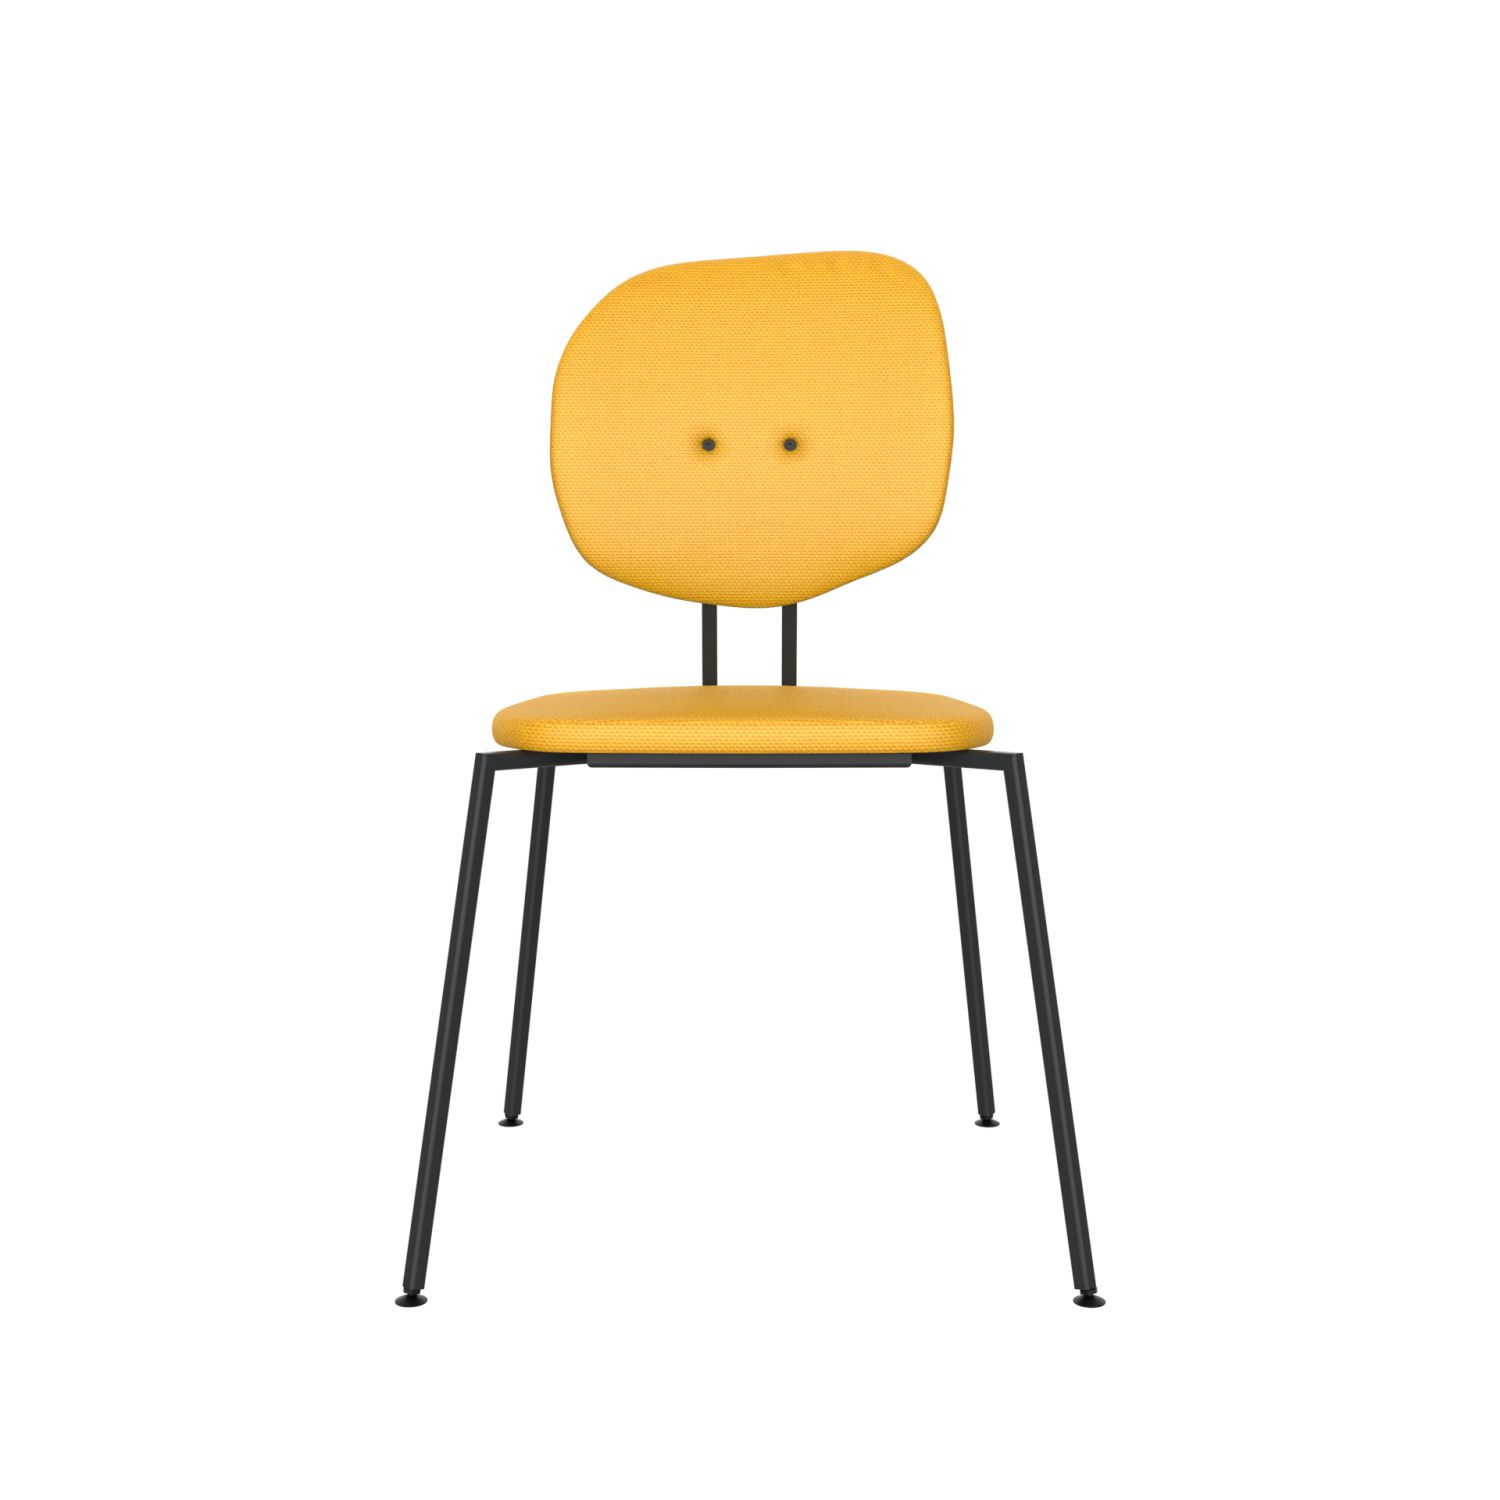 lensvelt maarten baas chair 141 stackable without armrests backrest h lemon yellow 051 black ral9005 hard leg ends